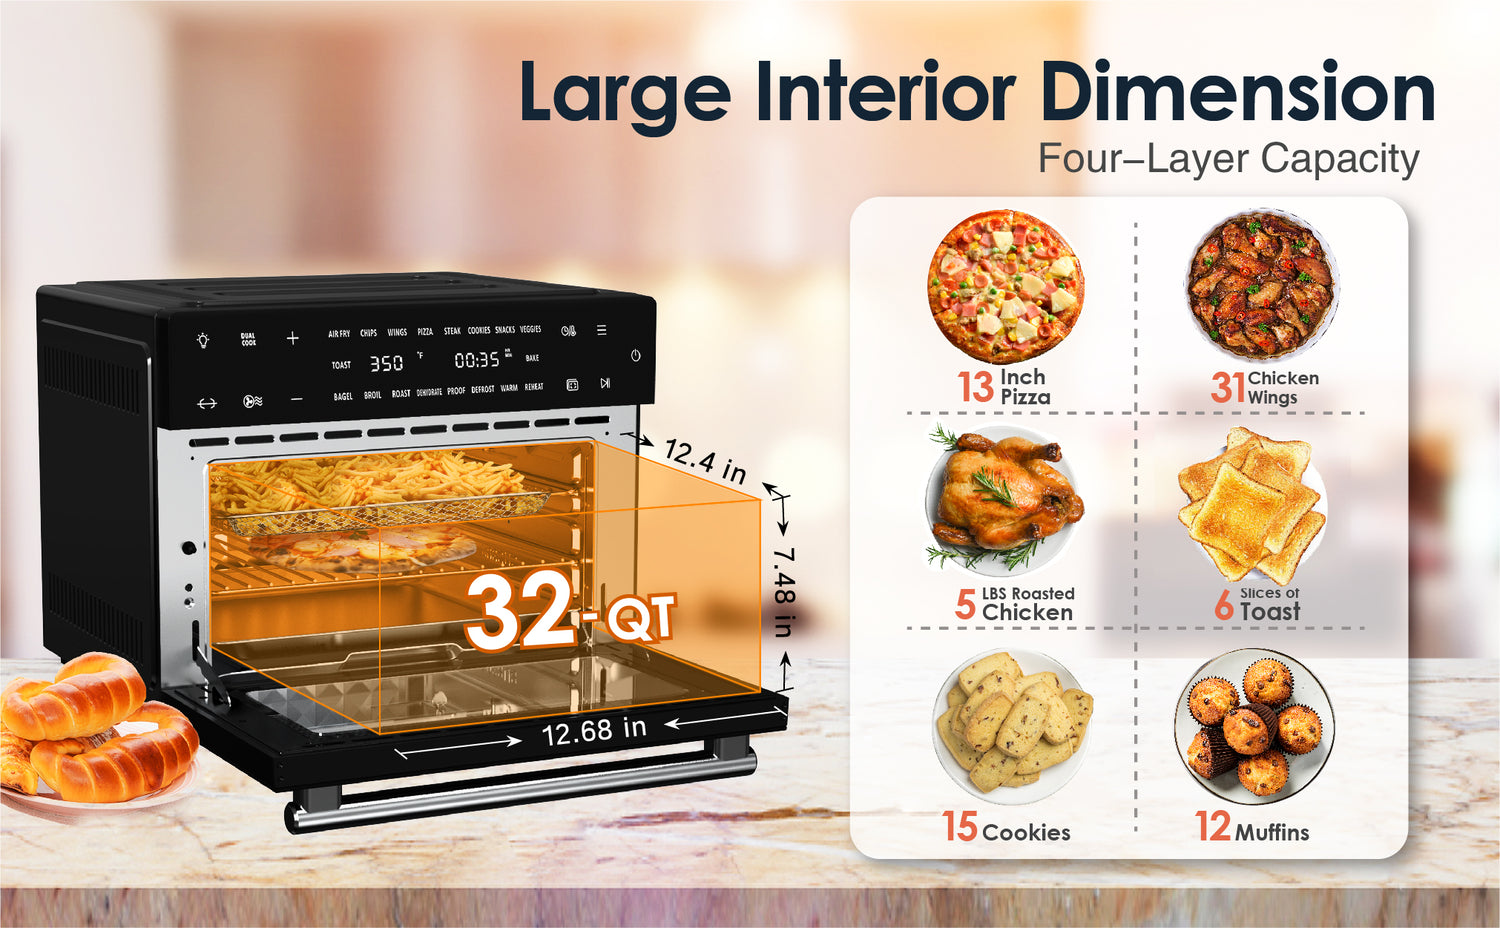 AUMATE Kitchencore 32-Quart Air Fryer Oven – Aumate